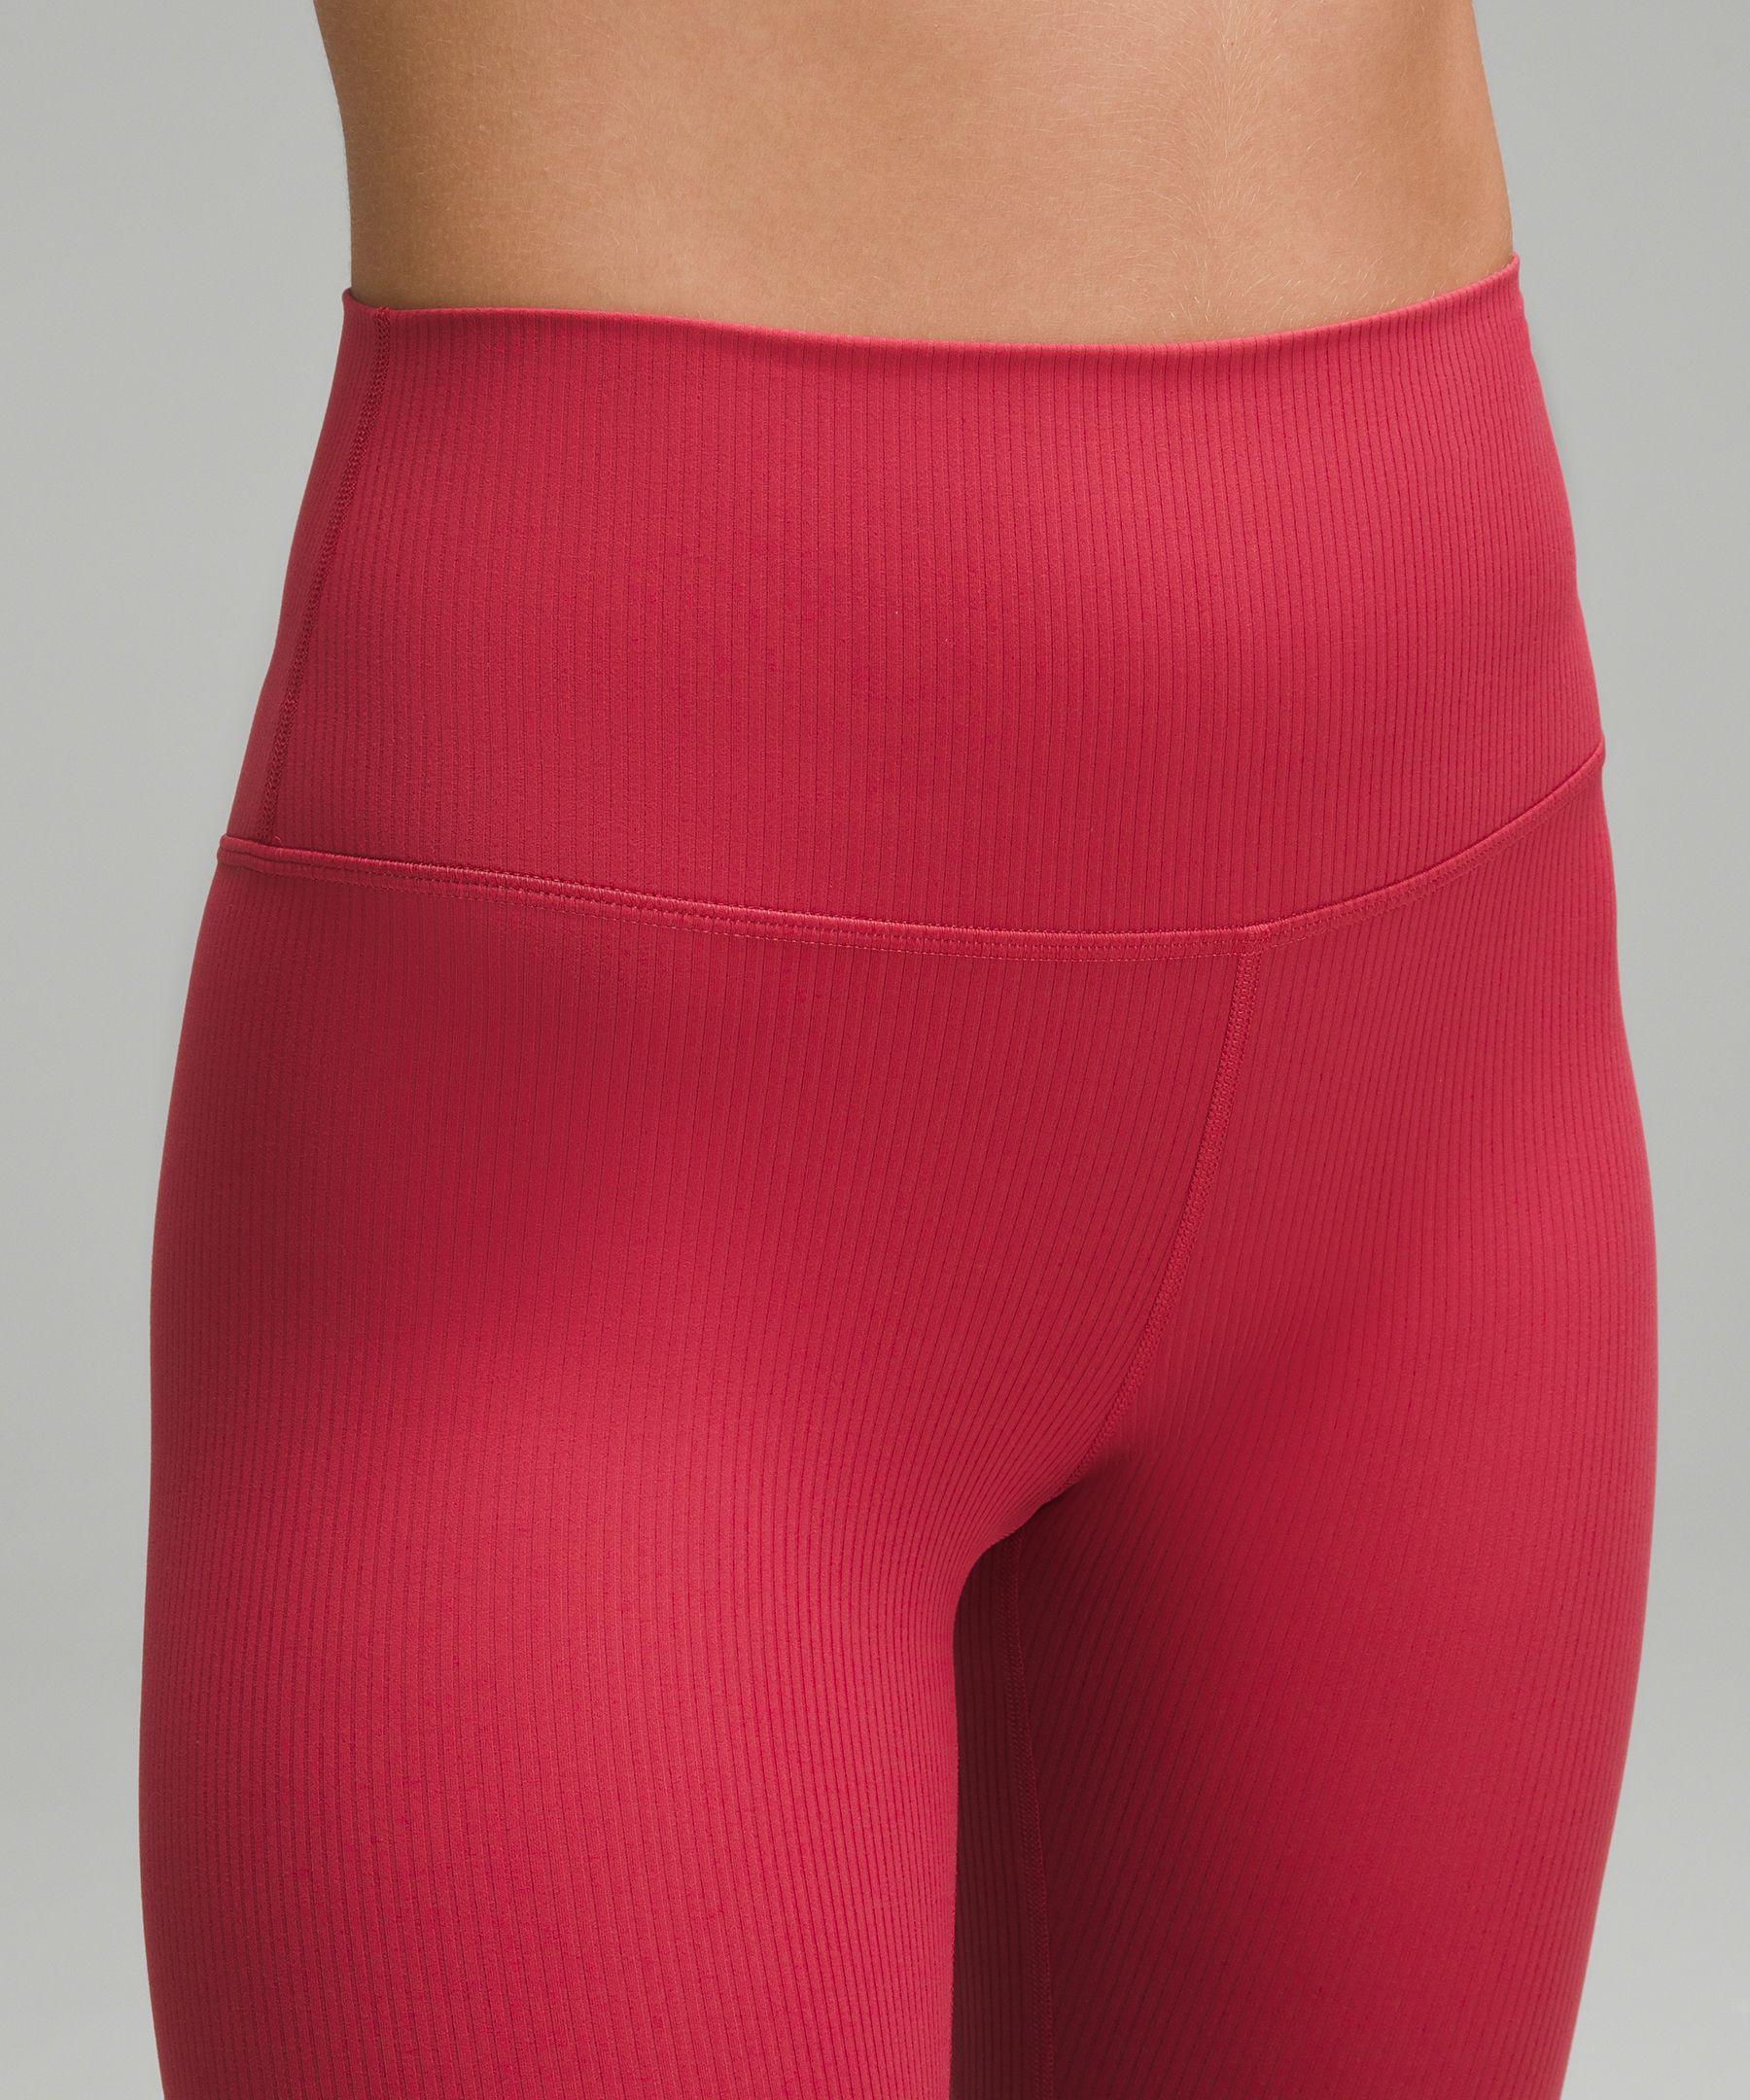 lululemon Align™ Ribbed High-Rise Pant 28, Women's Pants